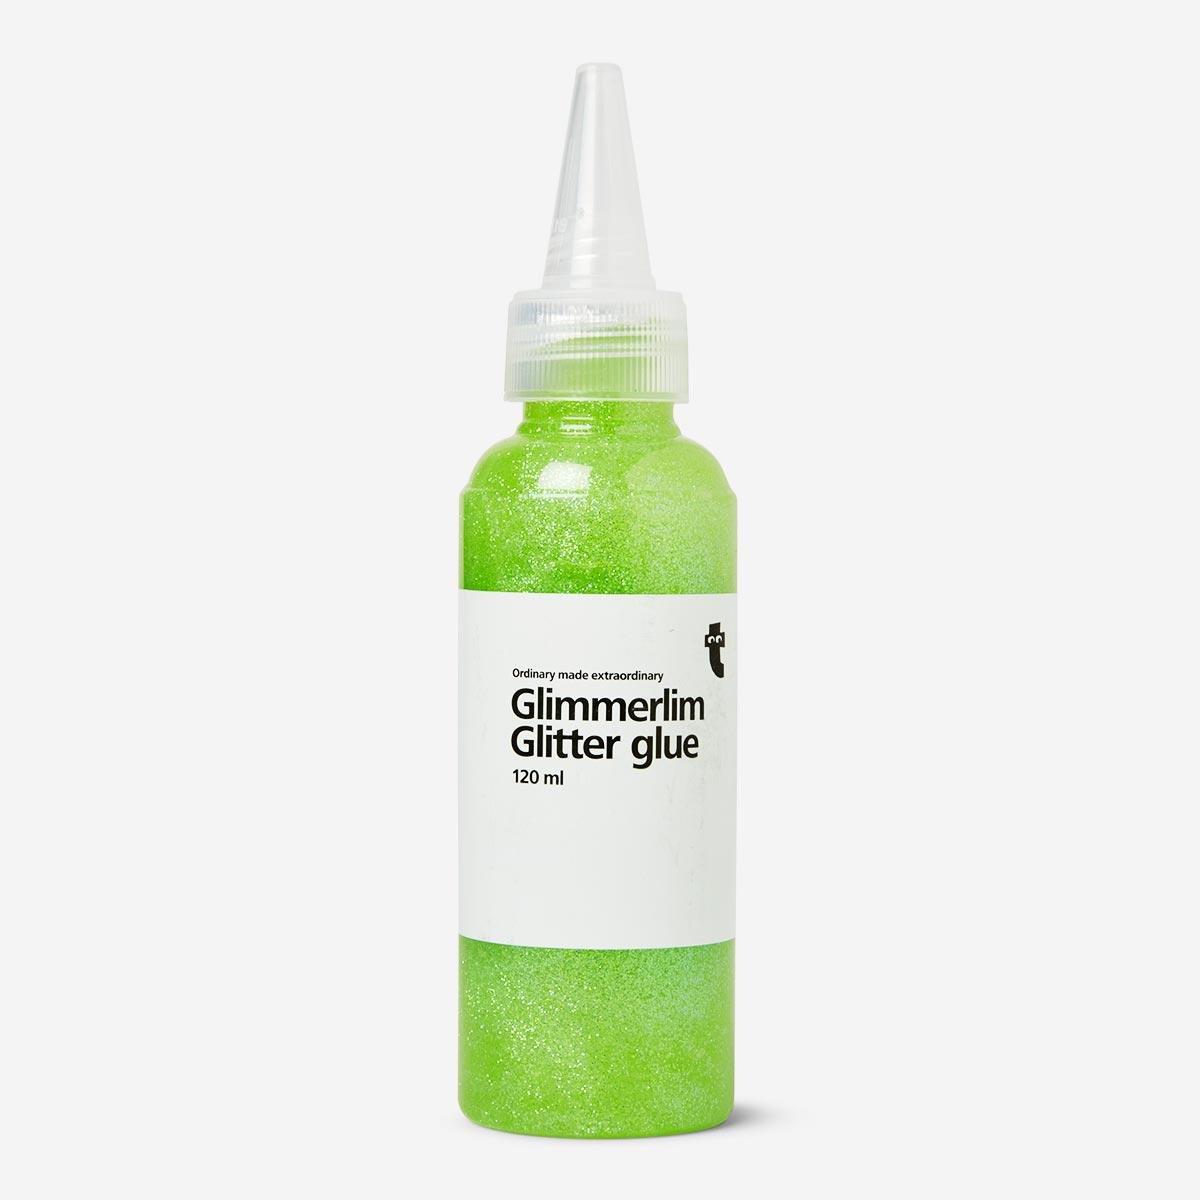 Green glitter glue